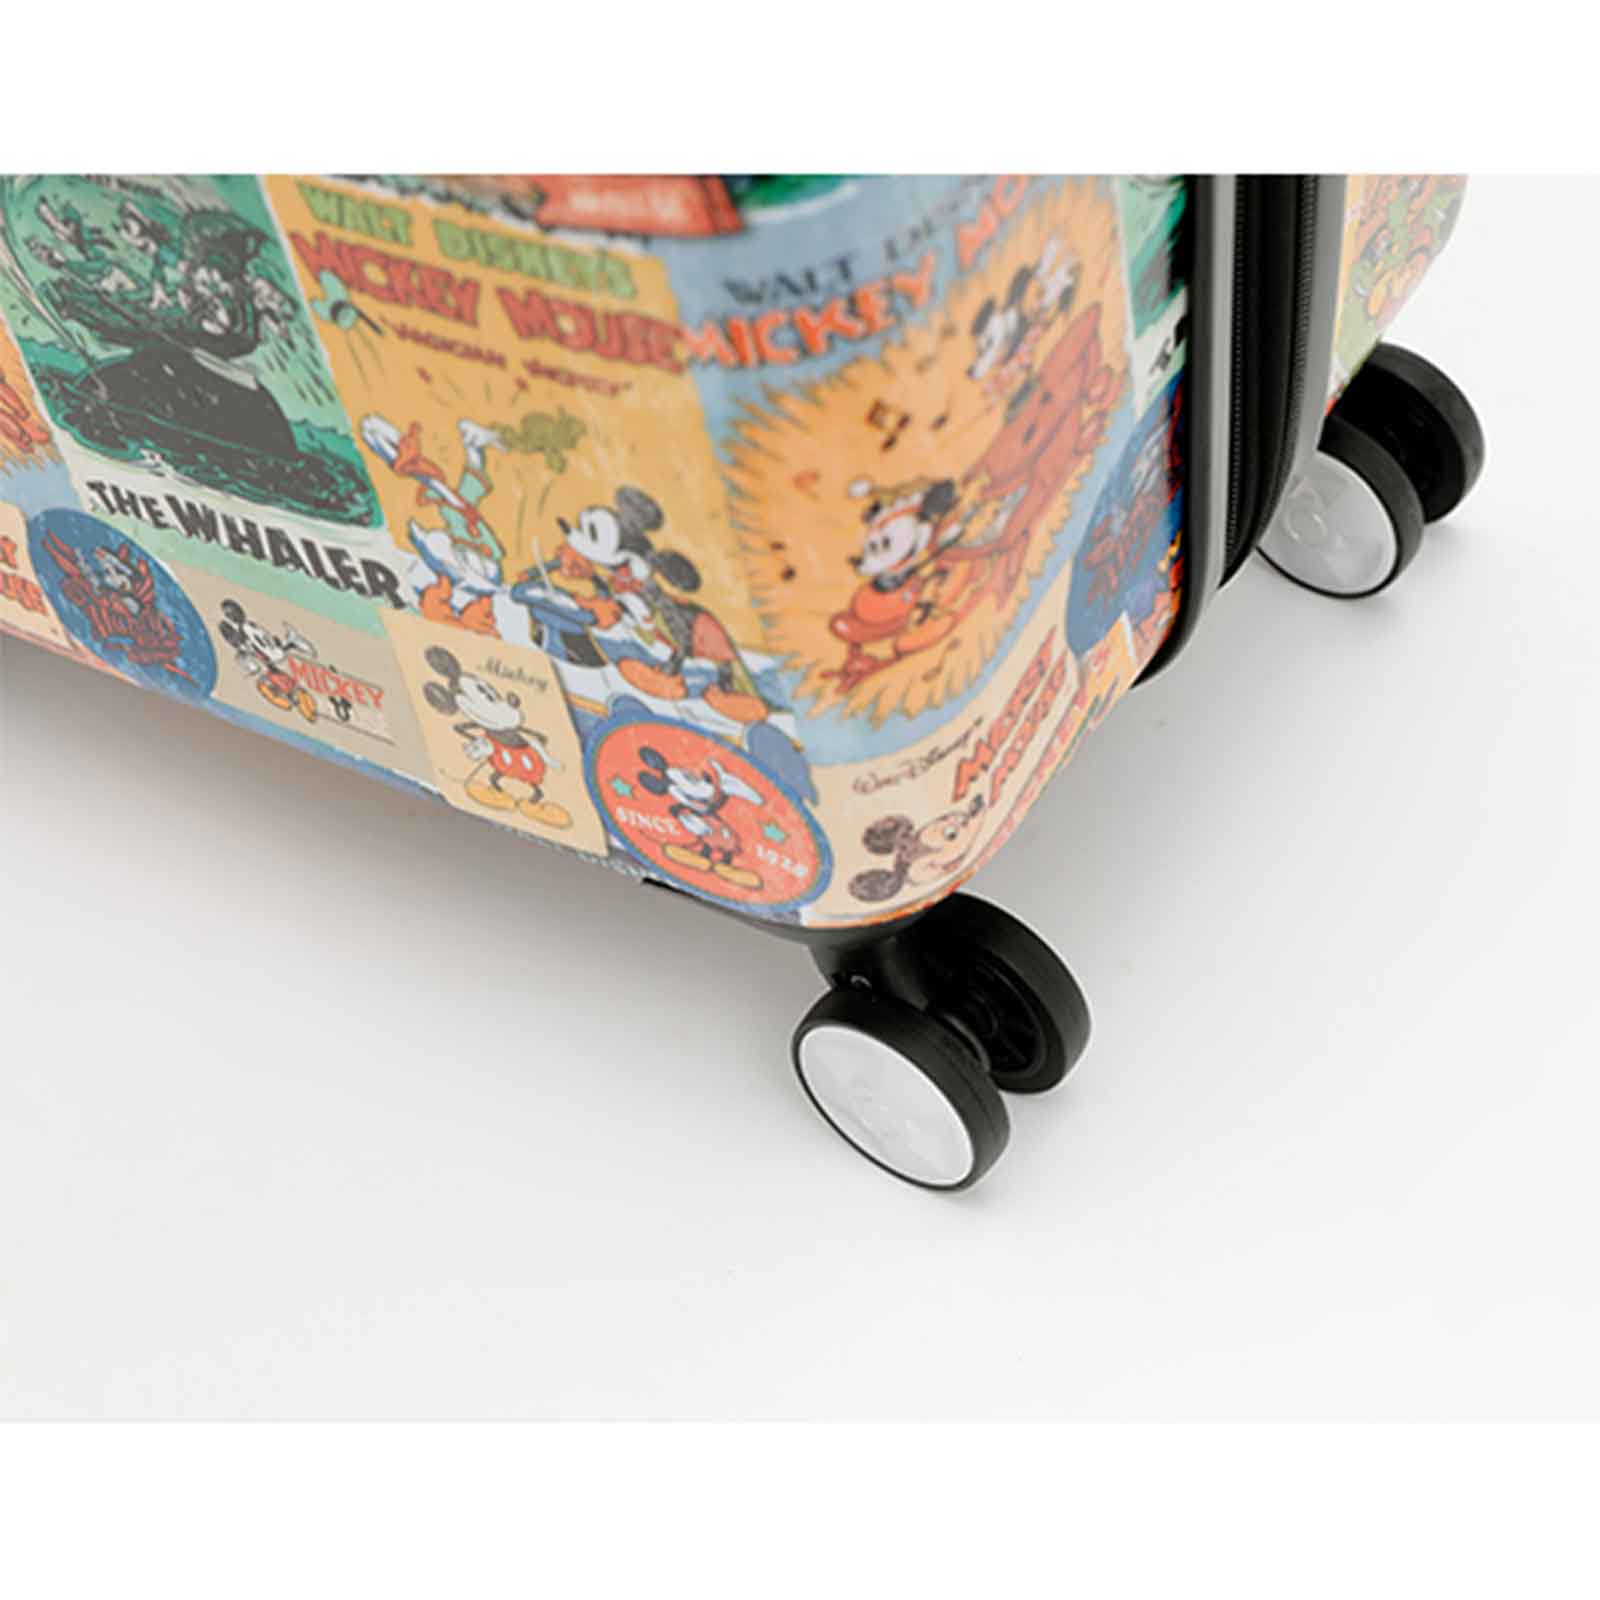 Disney Mickey Comic 29 Inch Large Suitcase